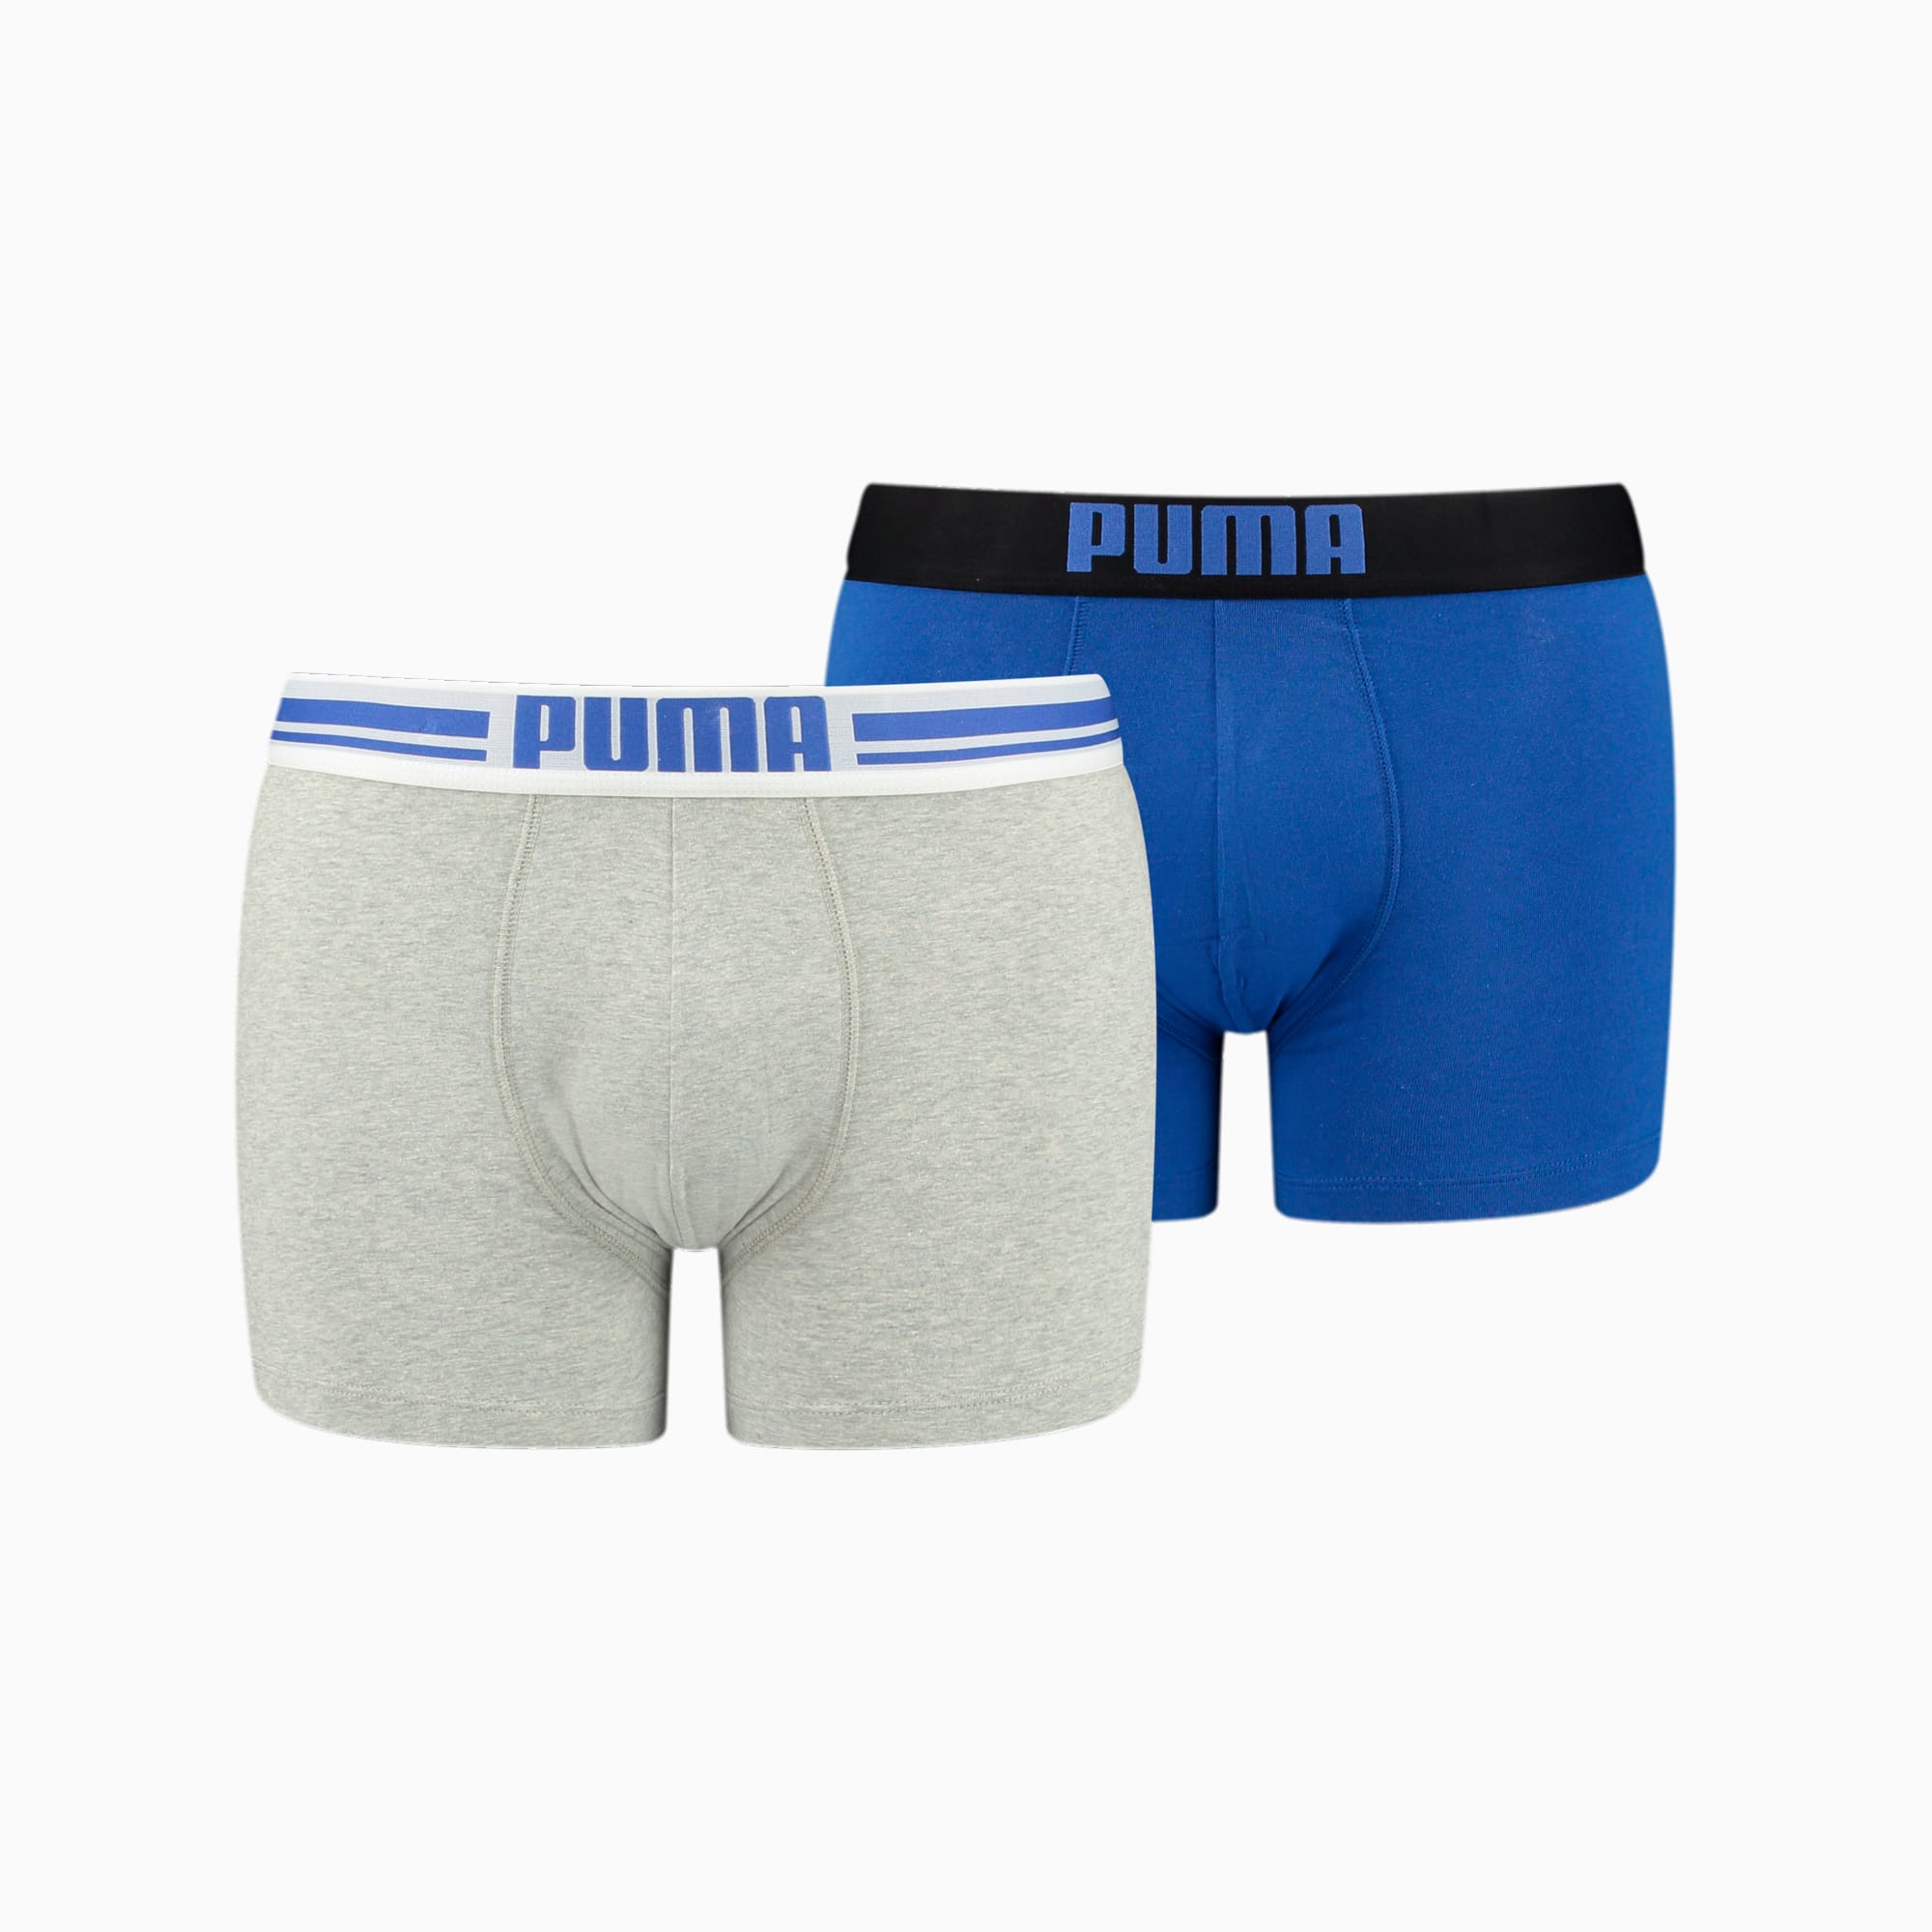 PUMA Placed Logo Herren-Boxershorts 2er-Pack, Mit Grau Melange, Grau/Blau, Größe: L, Kleidung